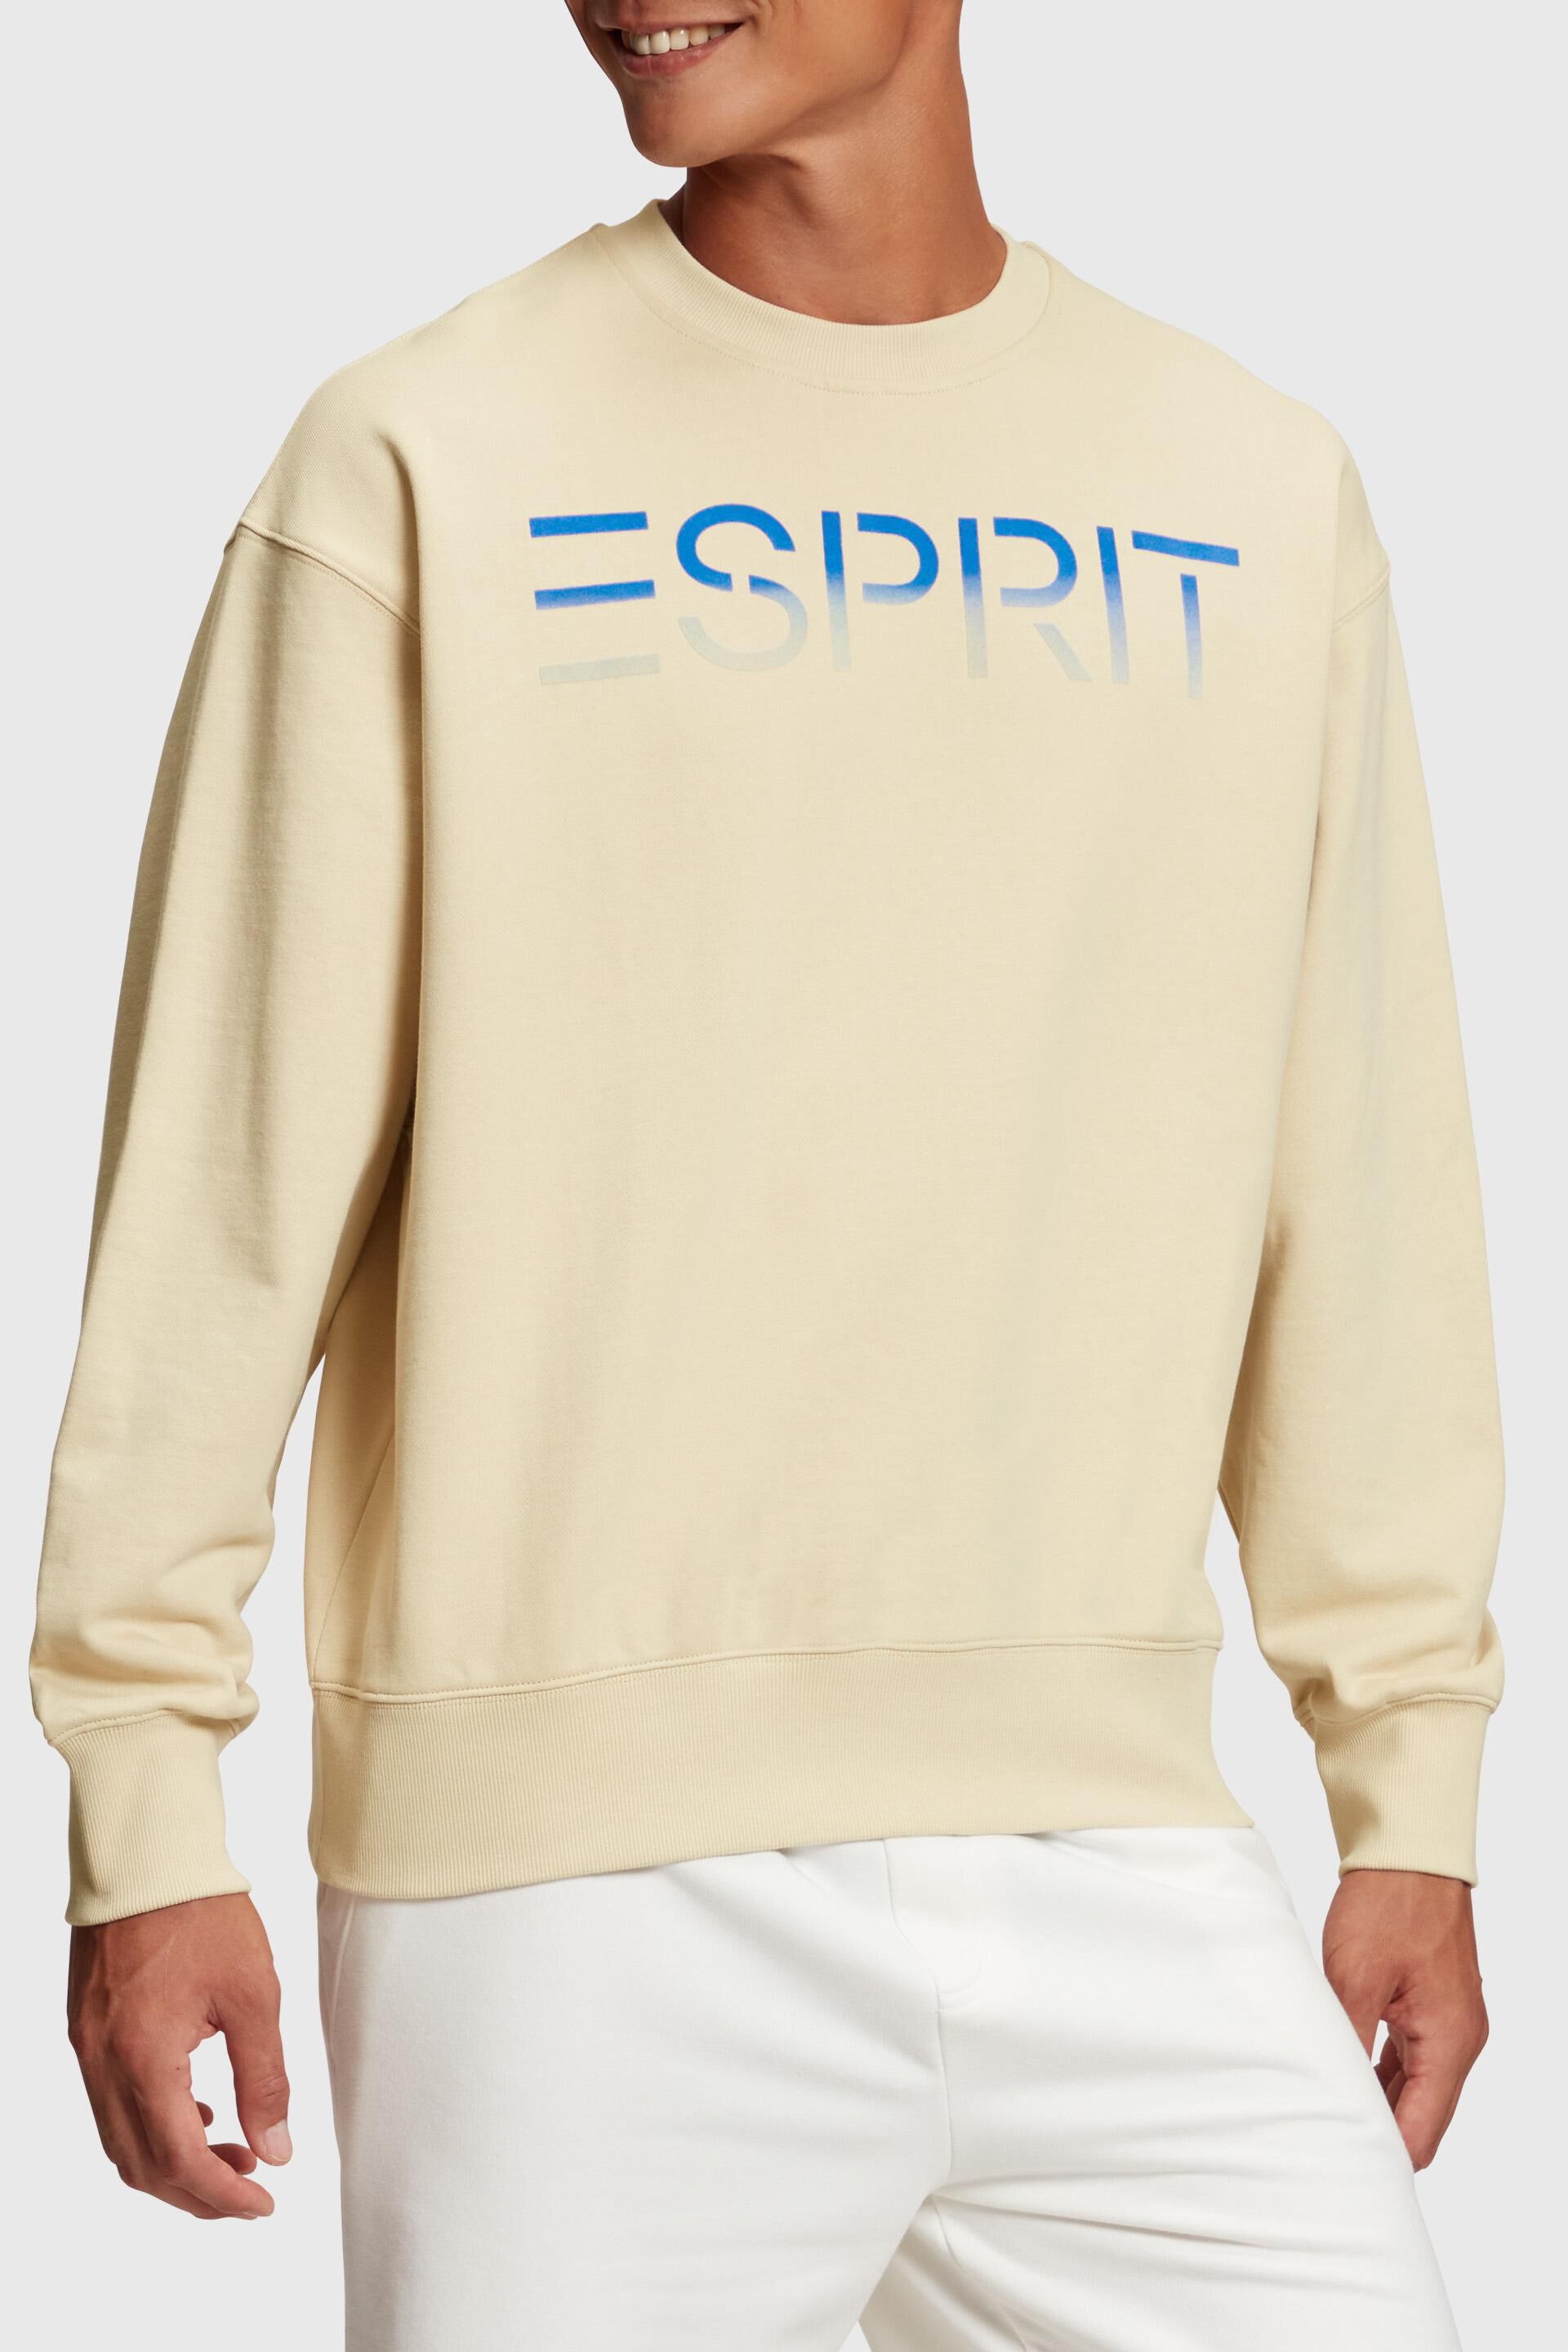 Esprit logo applique Flocked sweatshirt